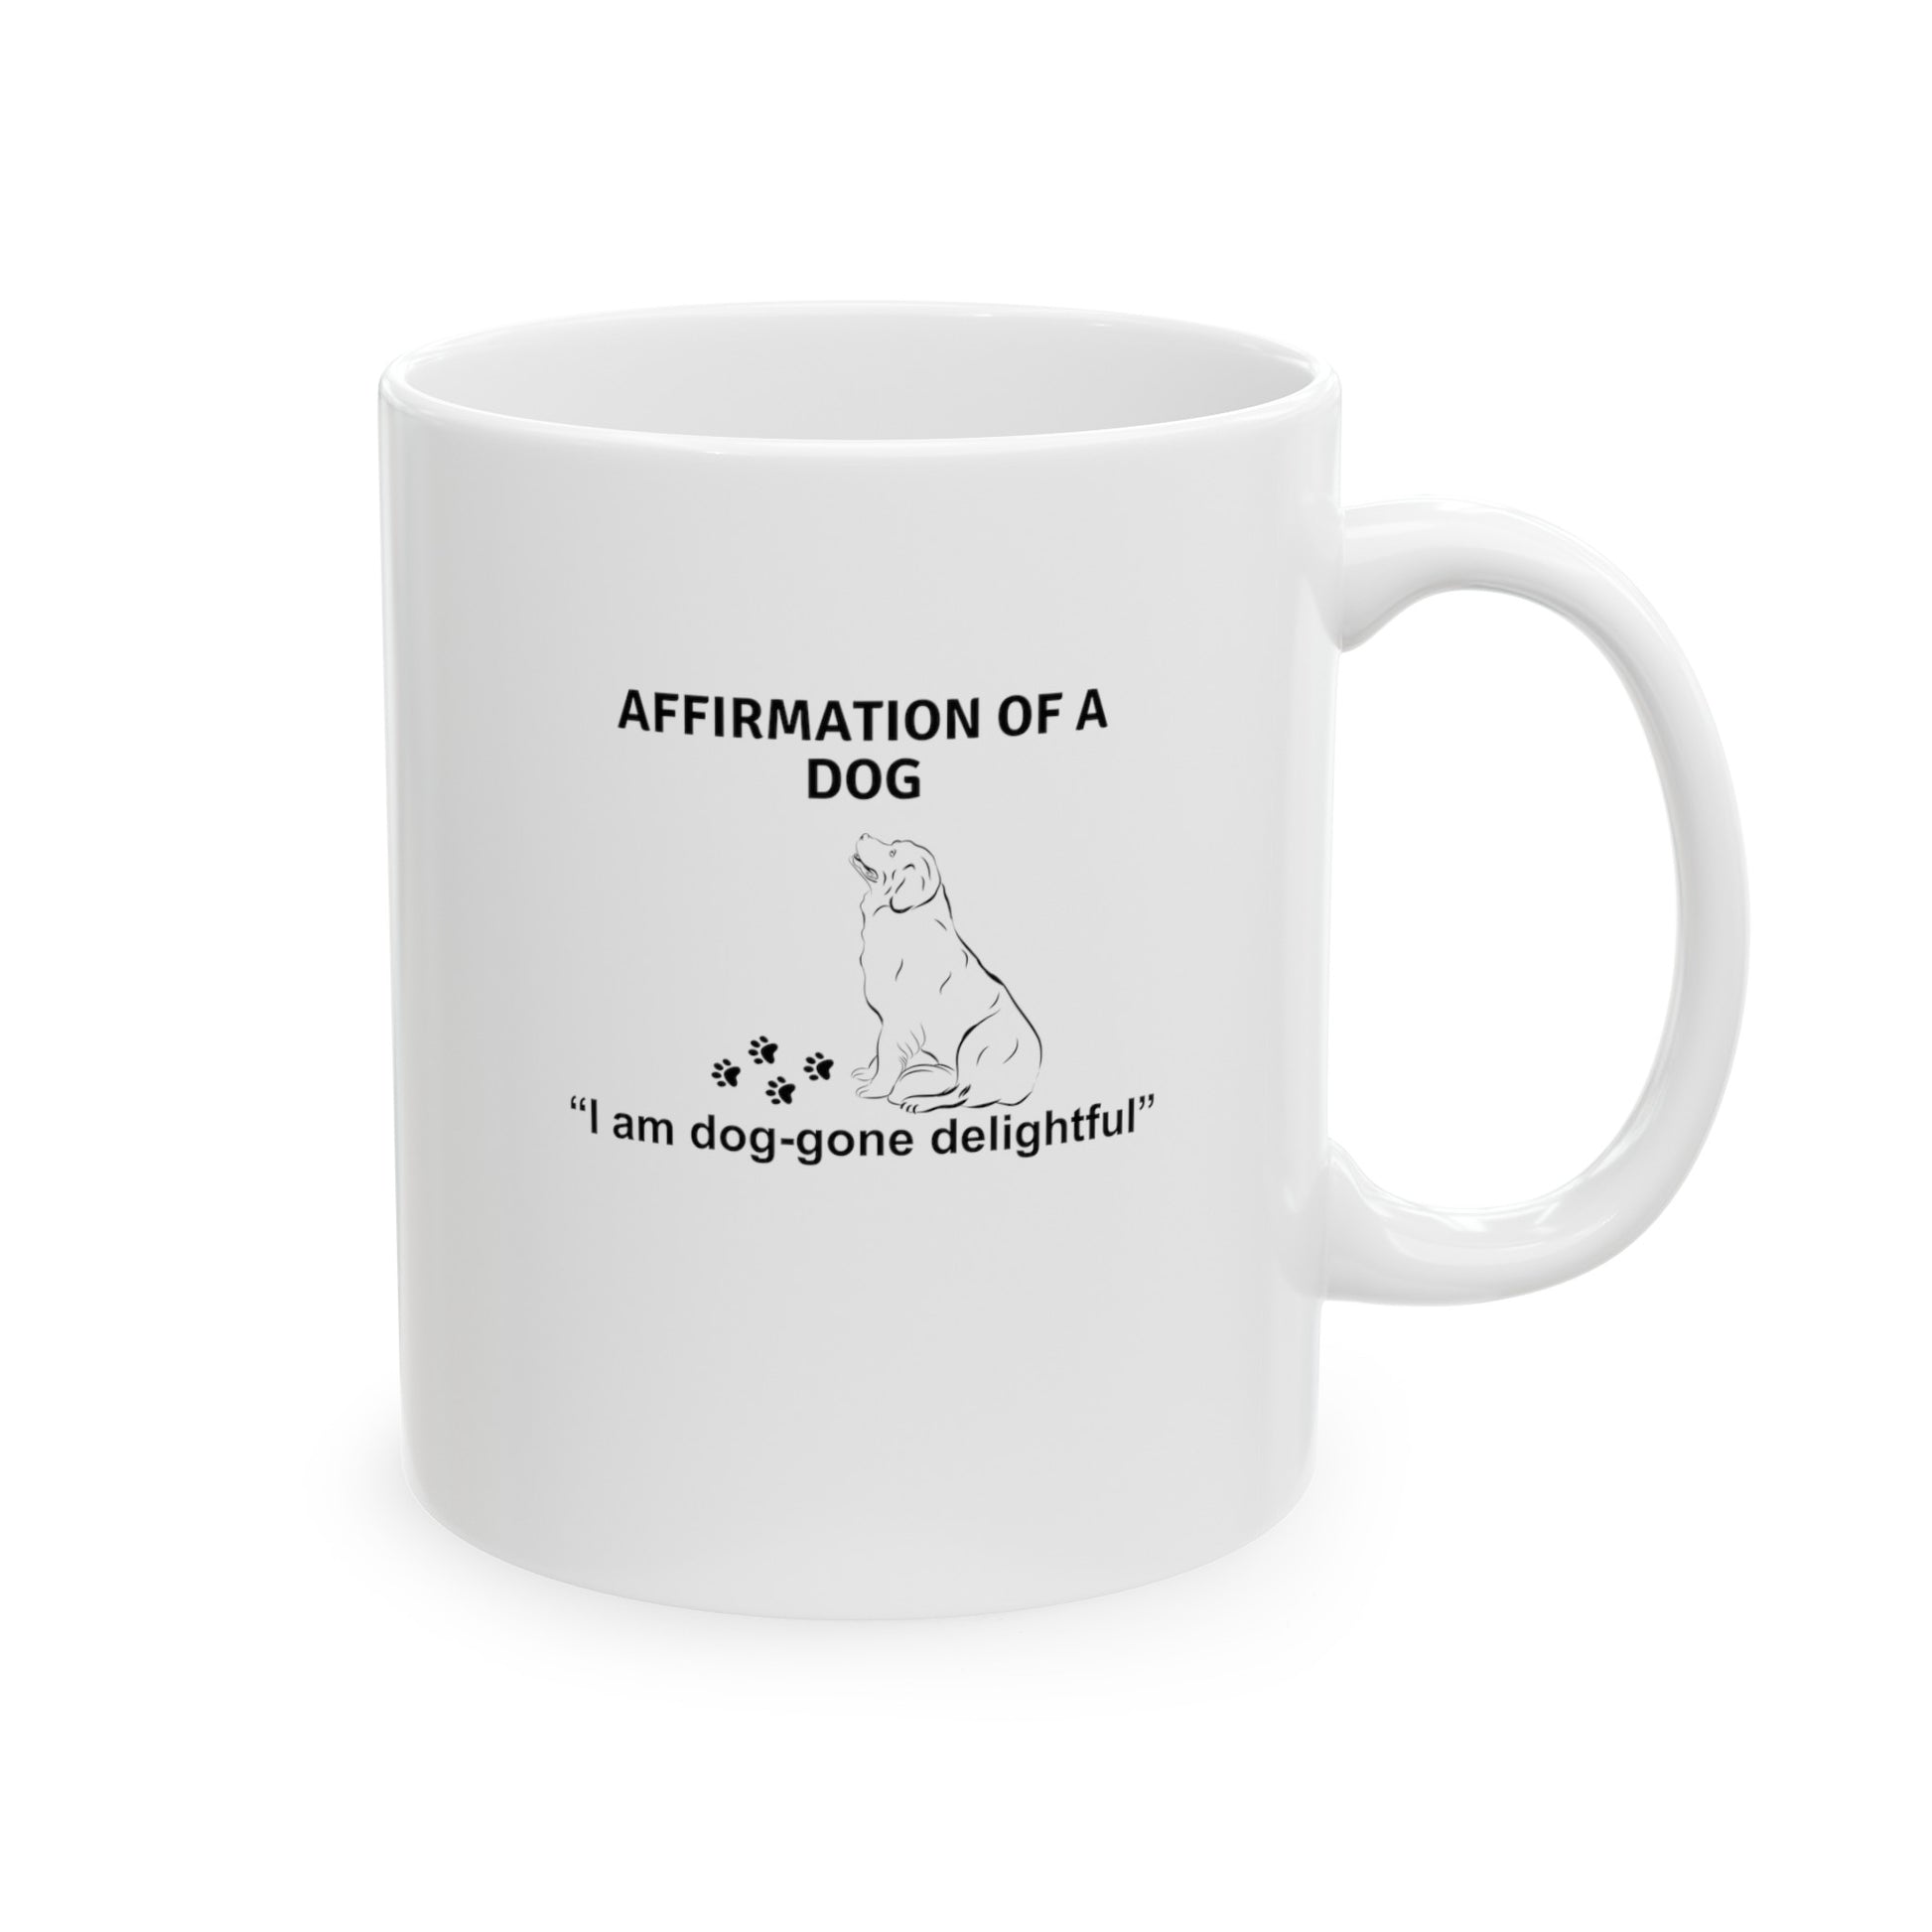 Affirmation of a dog mug white 11oz